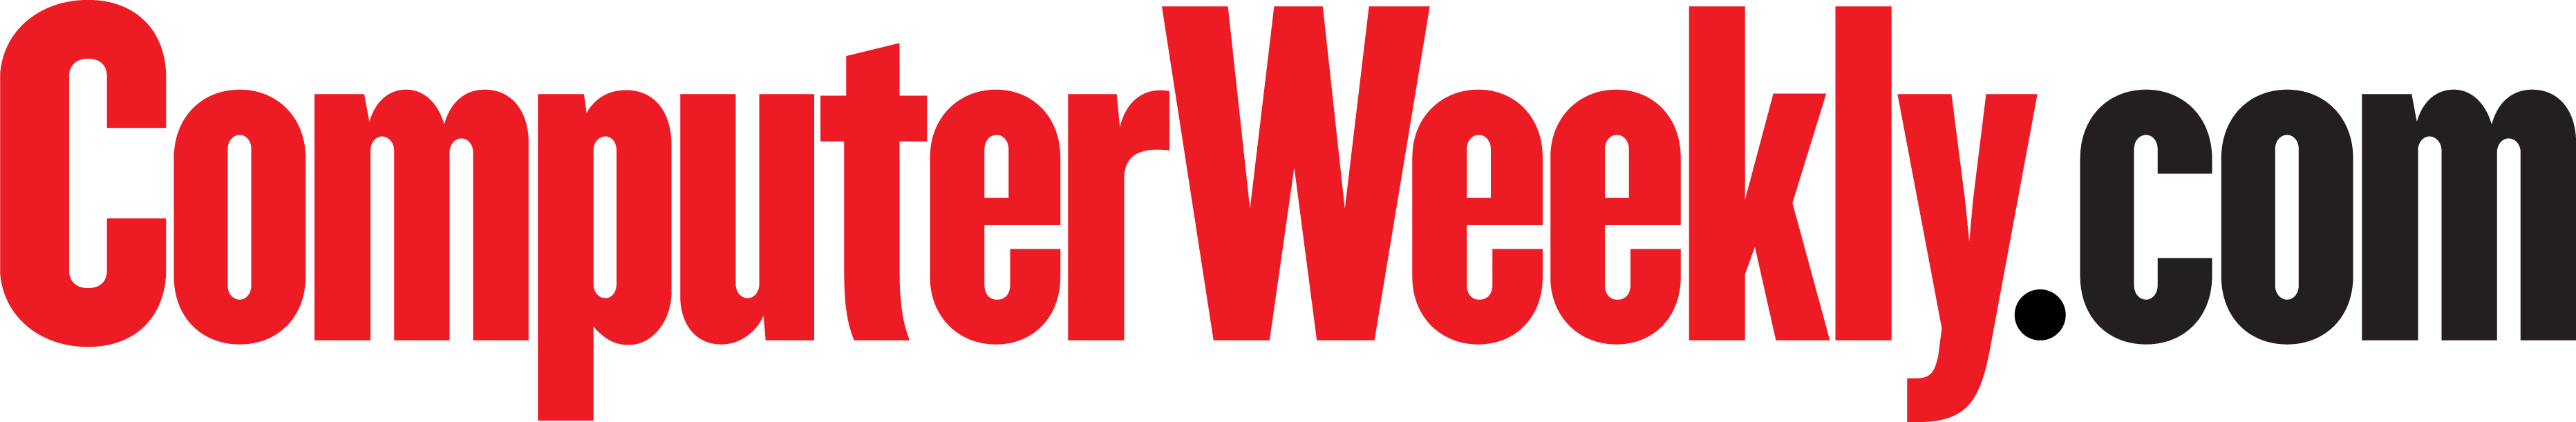 ComputerWeekly Logo-1